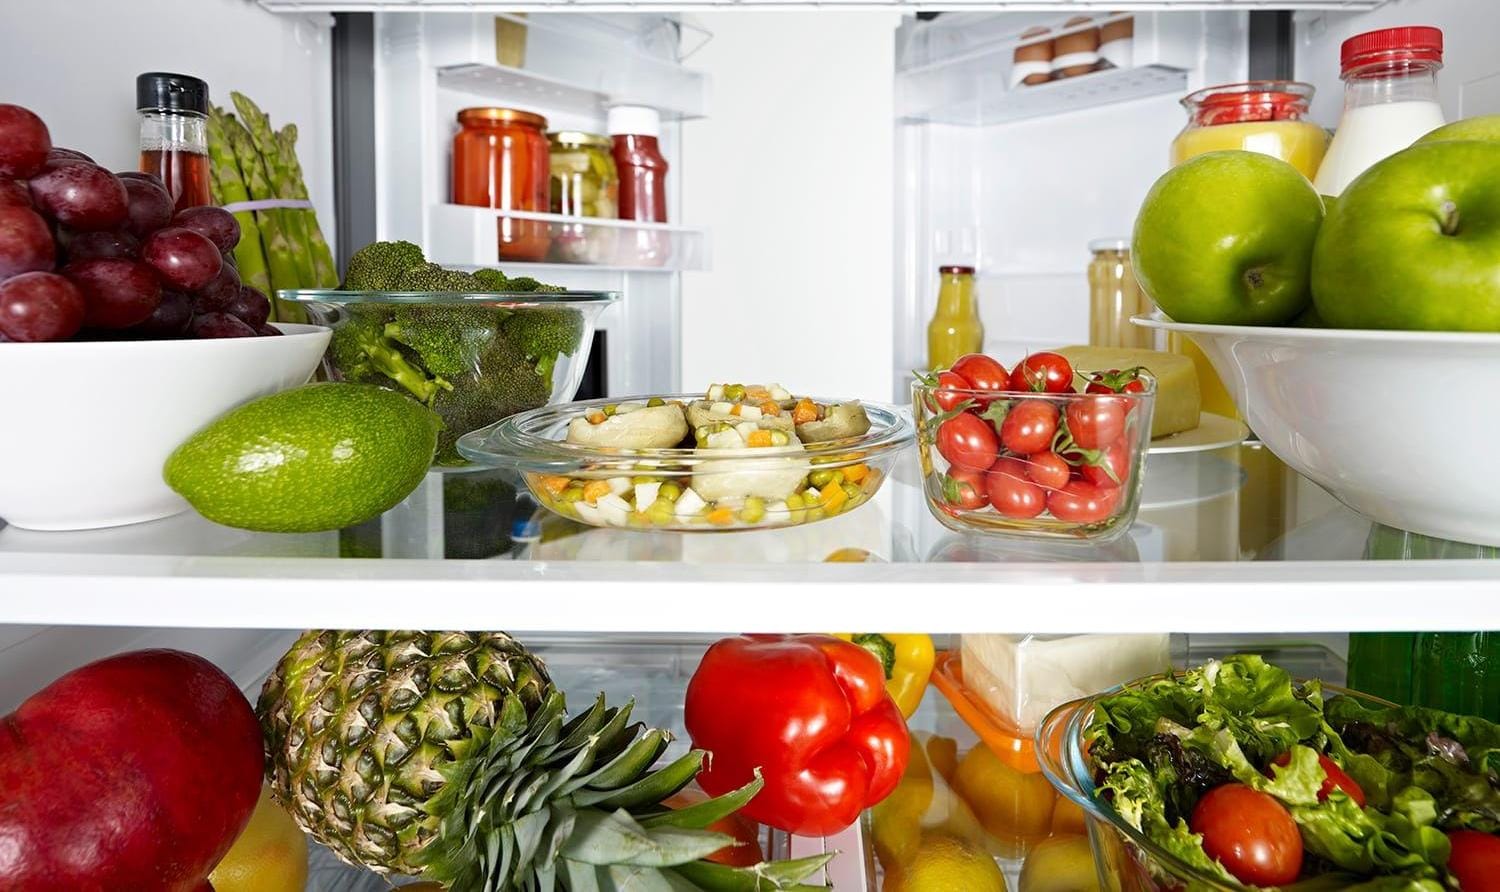 Food in open refrigerator